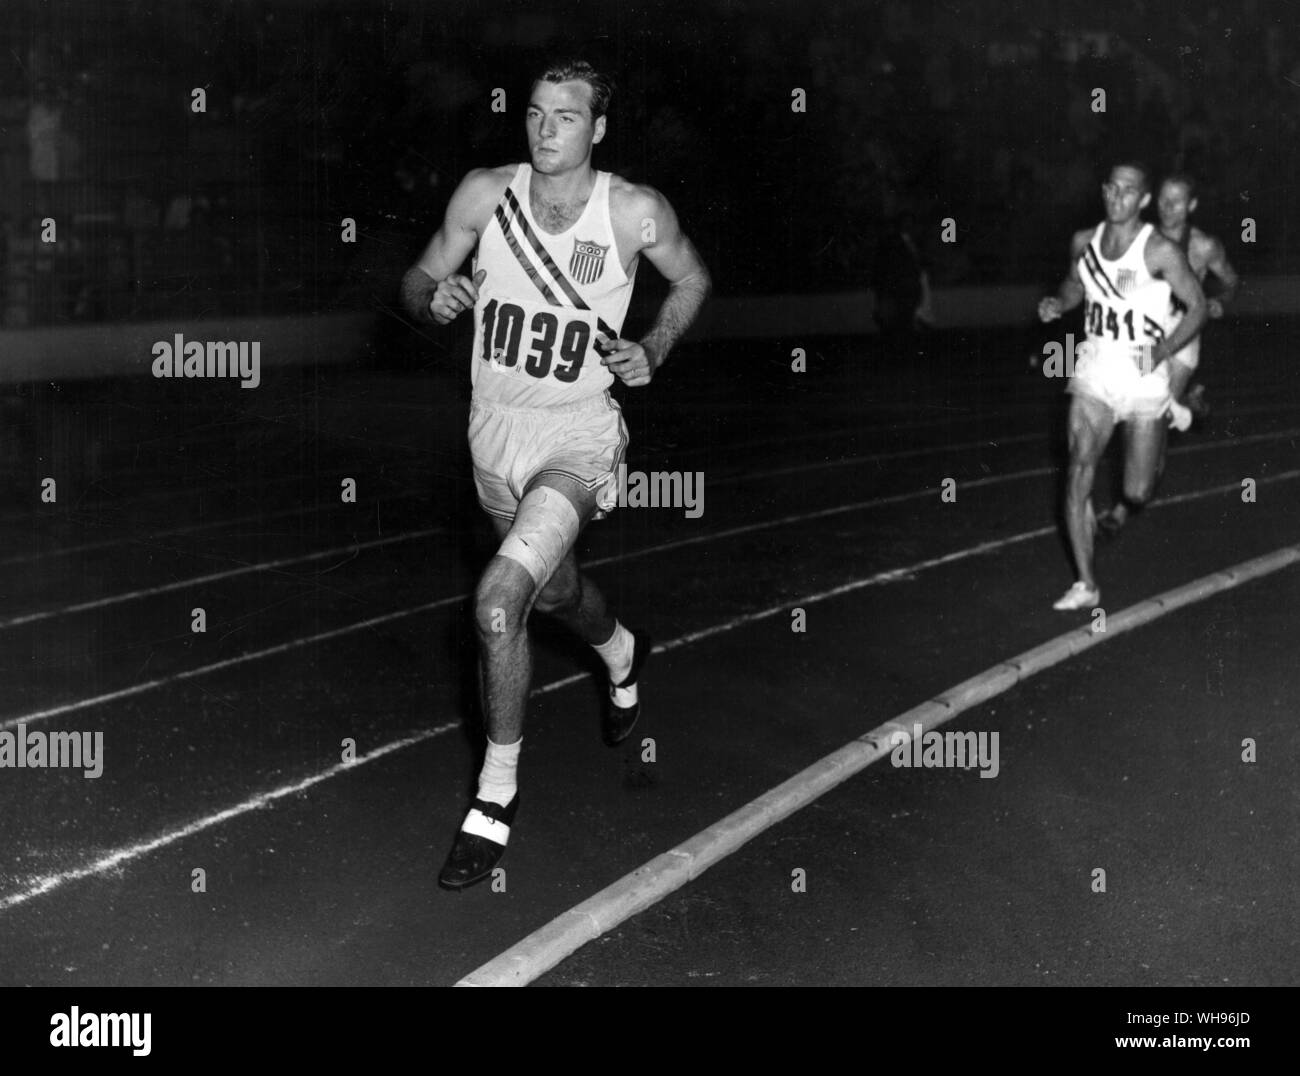 Finnland, Helsinki/Olympics, 1952: Robert Mathias (USA) im Zehnkampf Veranstaltung.. Stockfoto